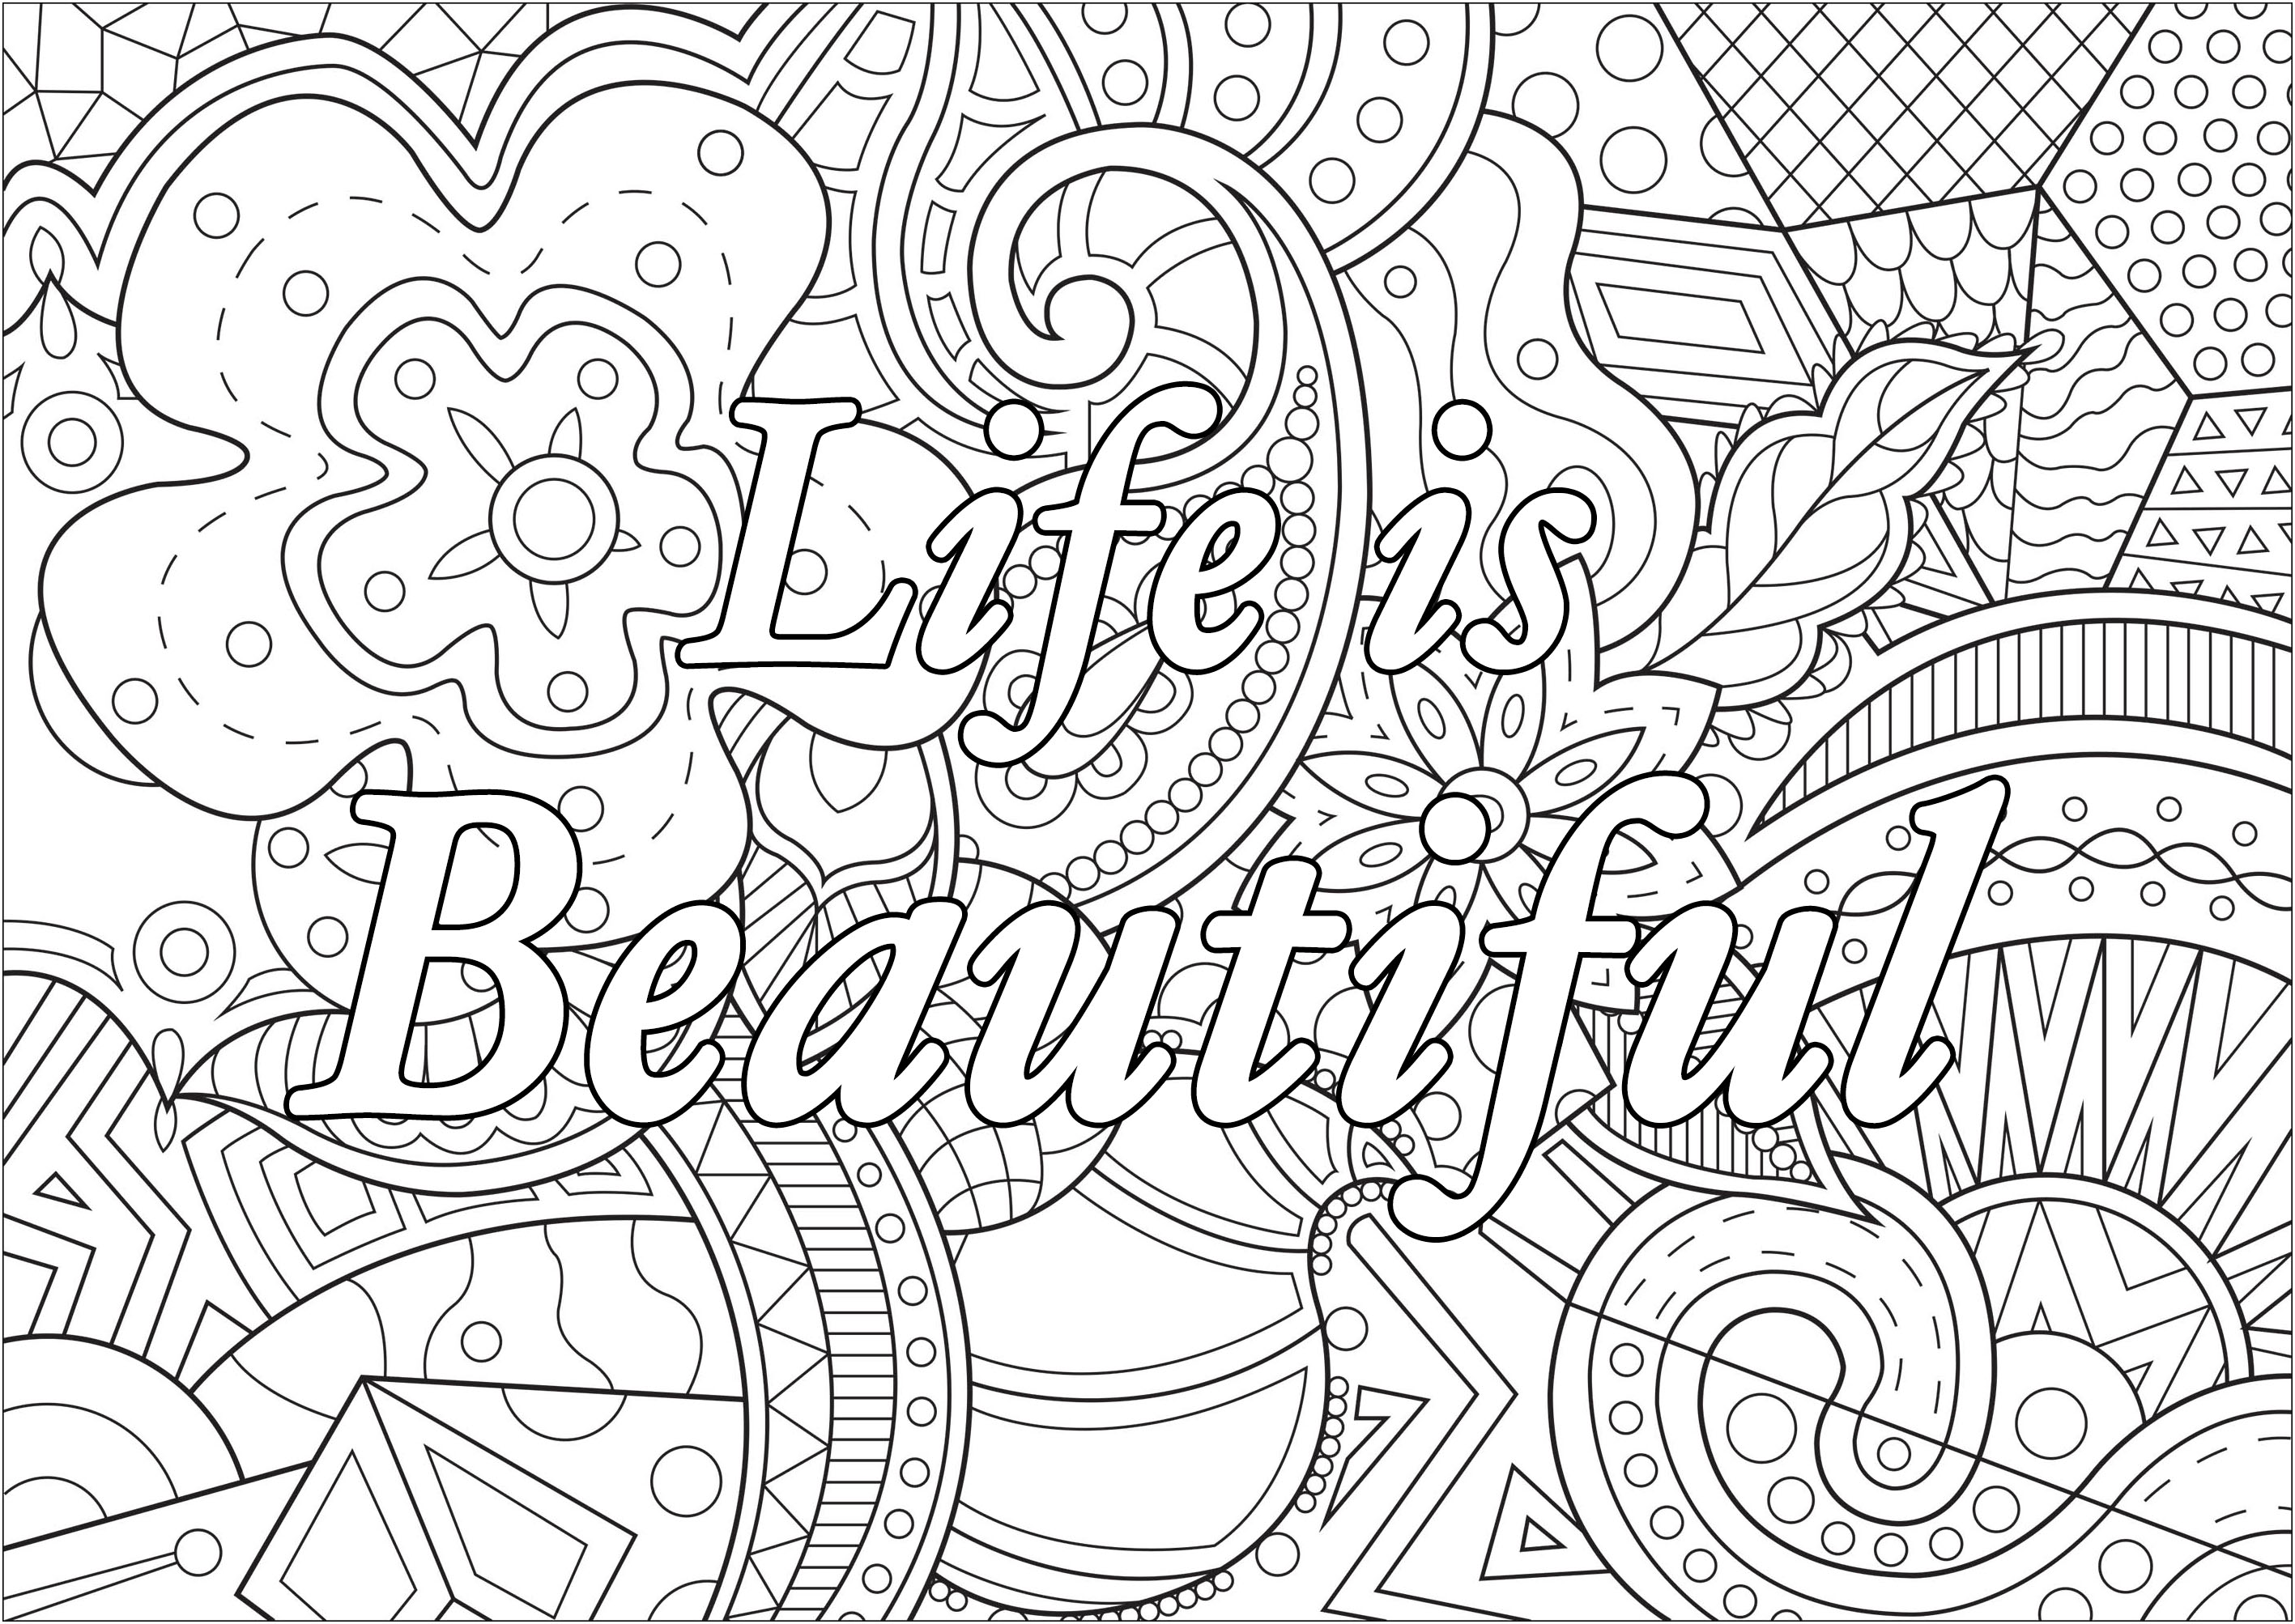 La vida es bella